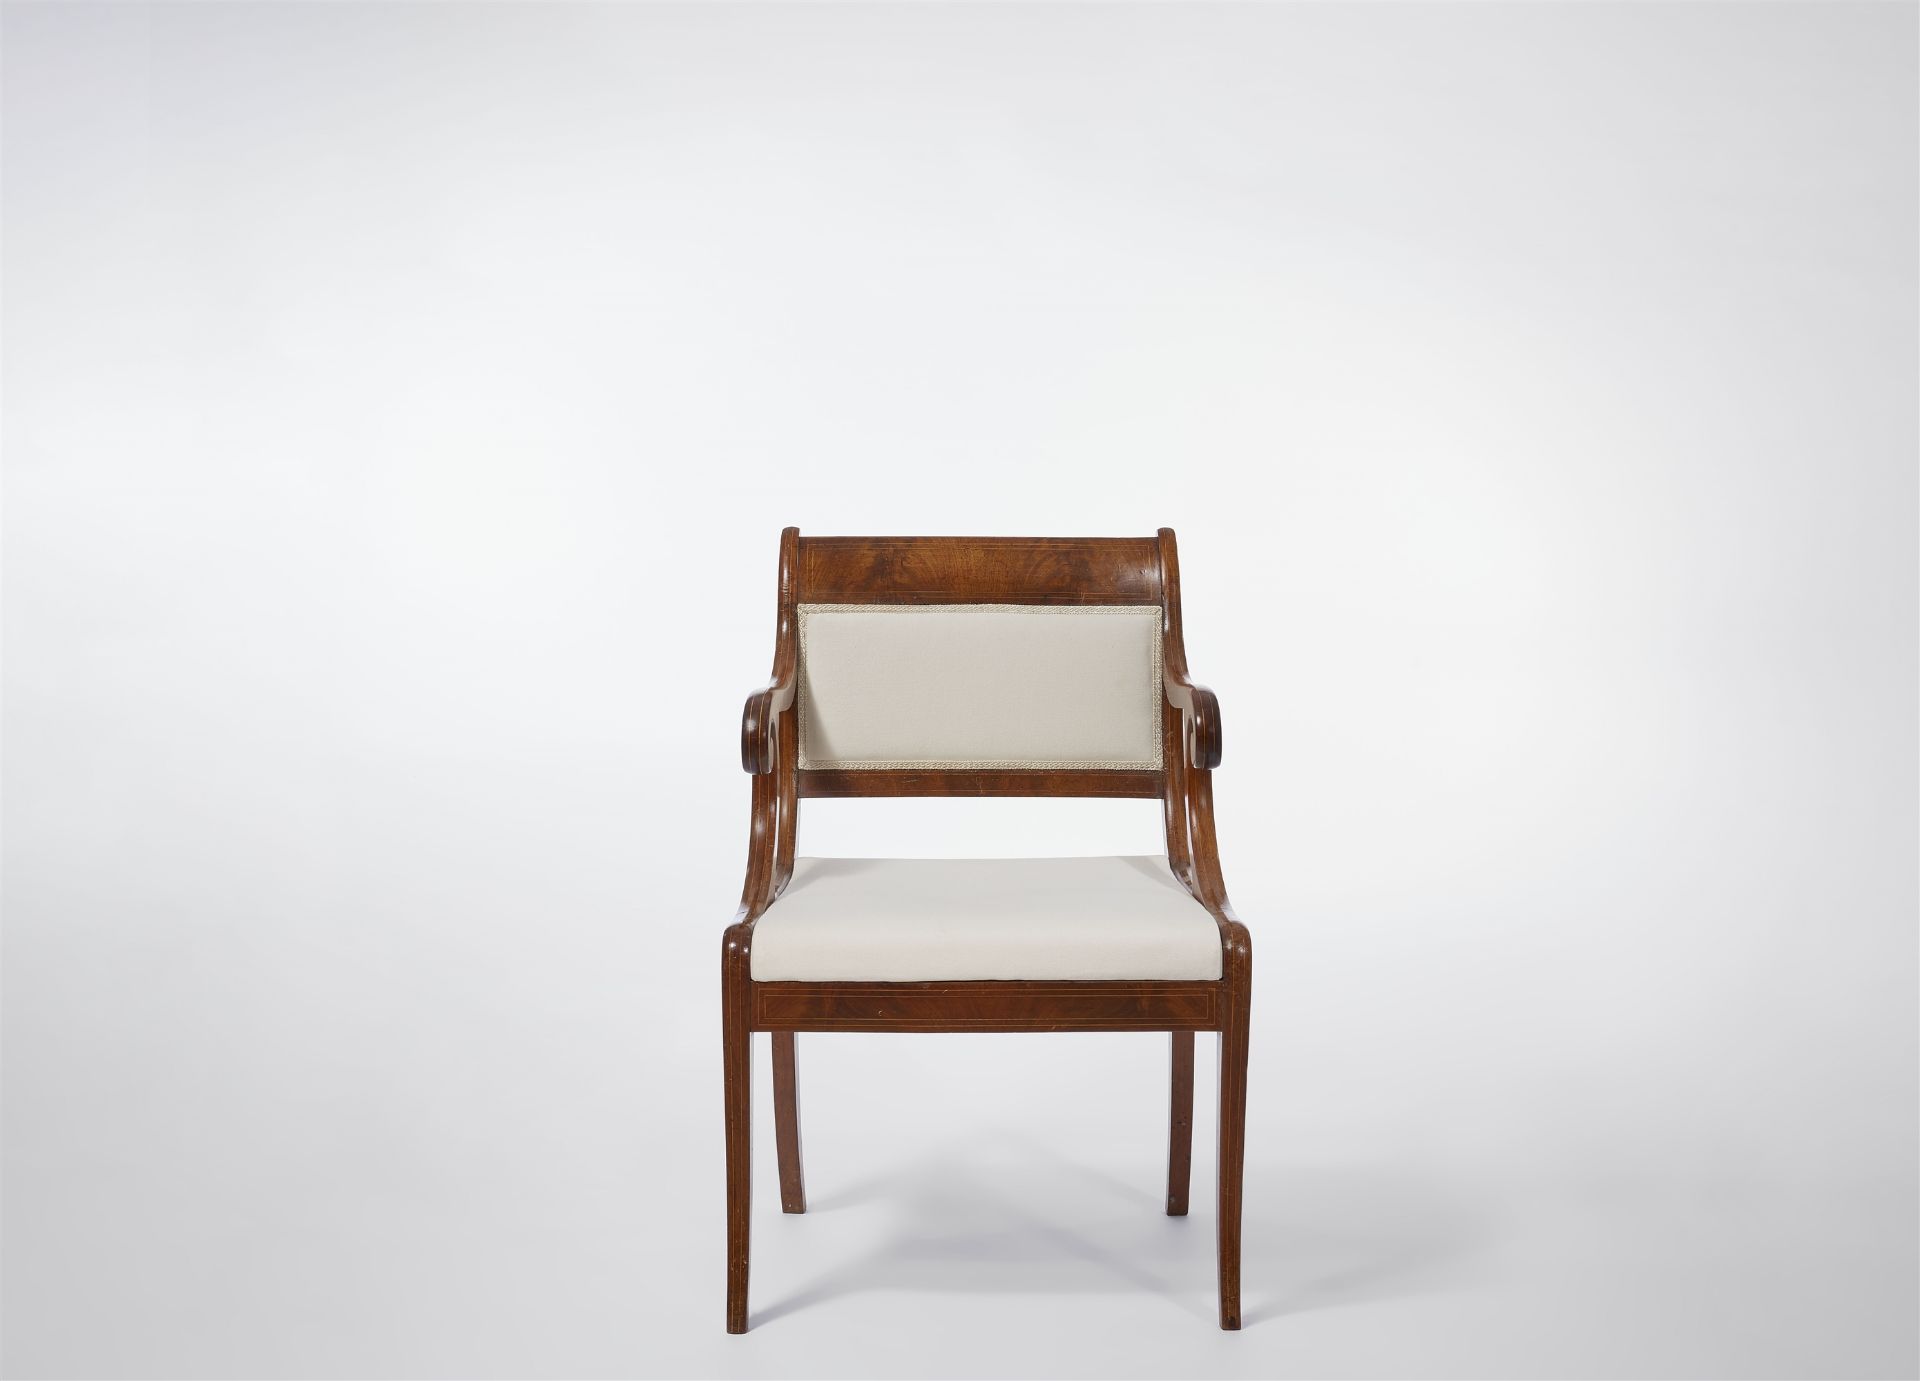 An armchair after a design by Karl Friedrich Schinkel - Image 7 of 7